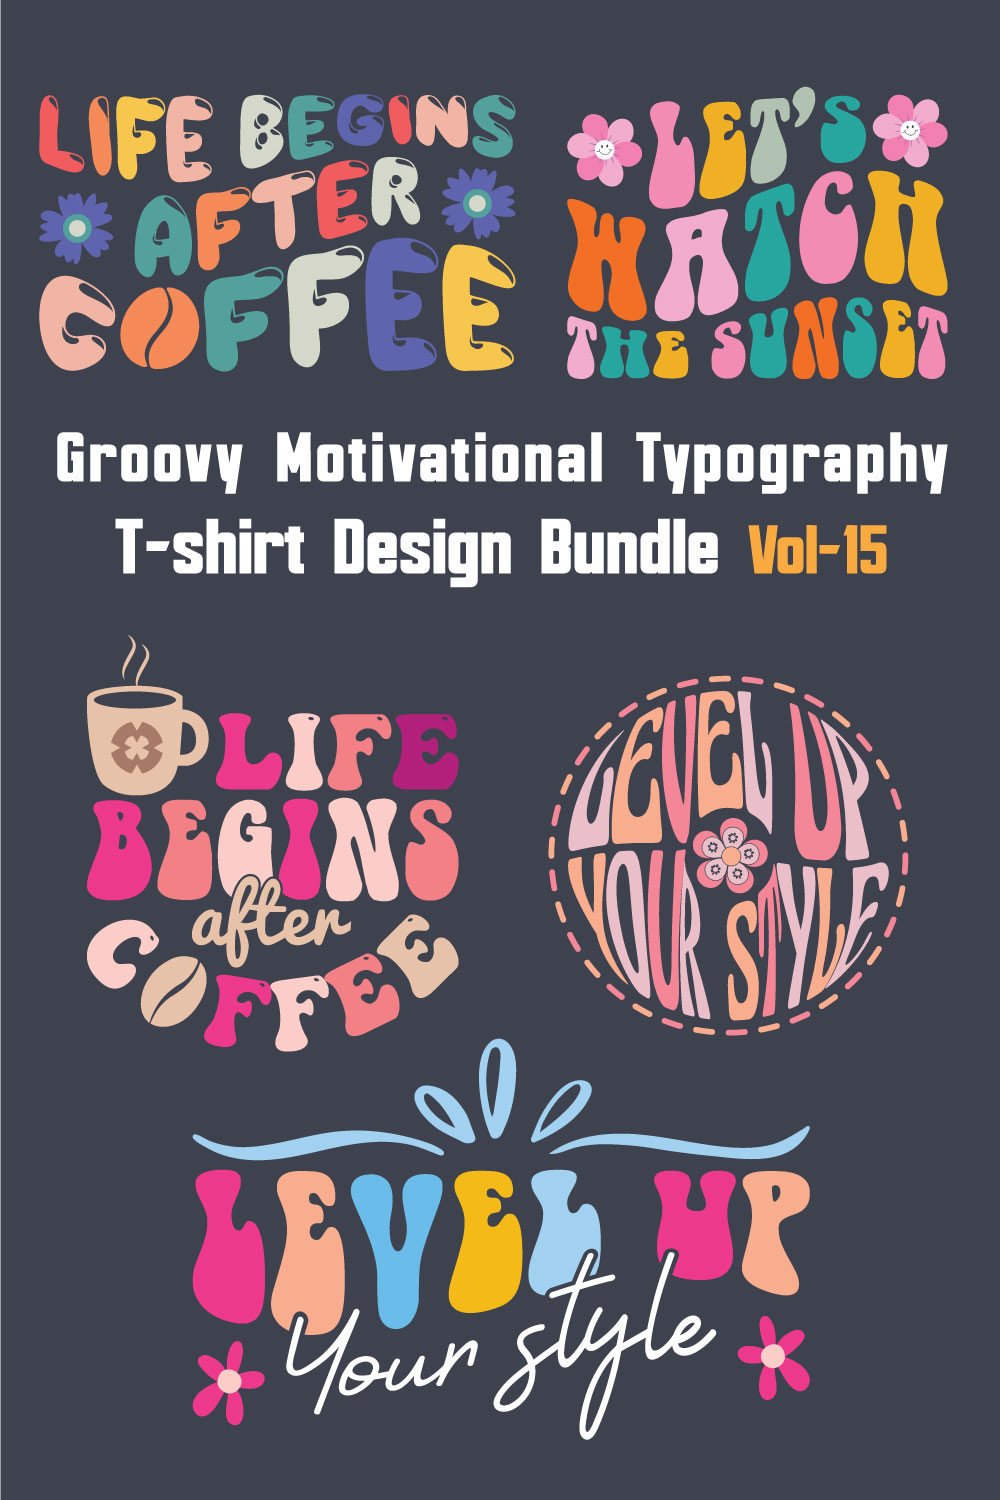 Groovy Motivational Typography T-shirt Design Bundle Vol-15 pinterest preview image.